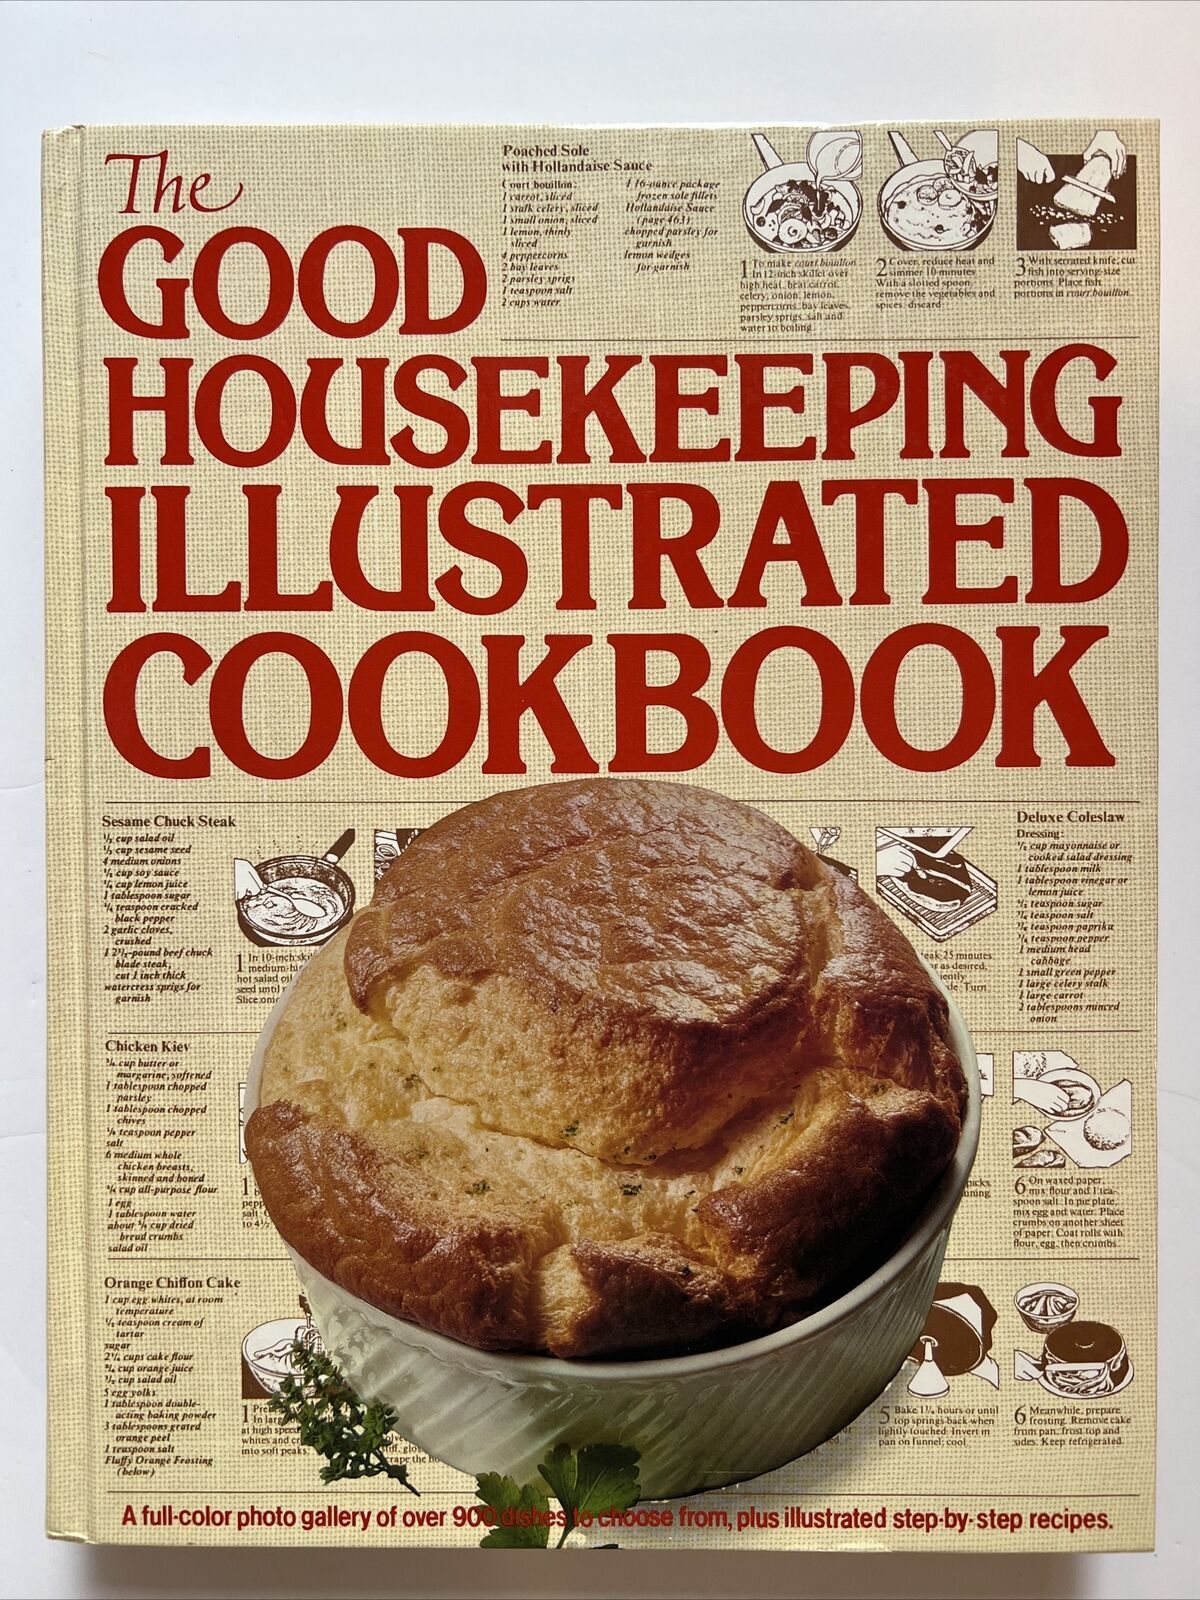 Copertina del libro di cucina illustrata The Good Housekeeping